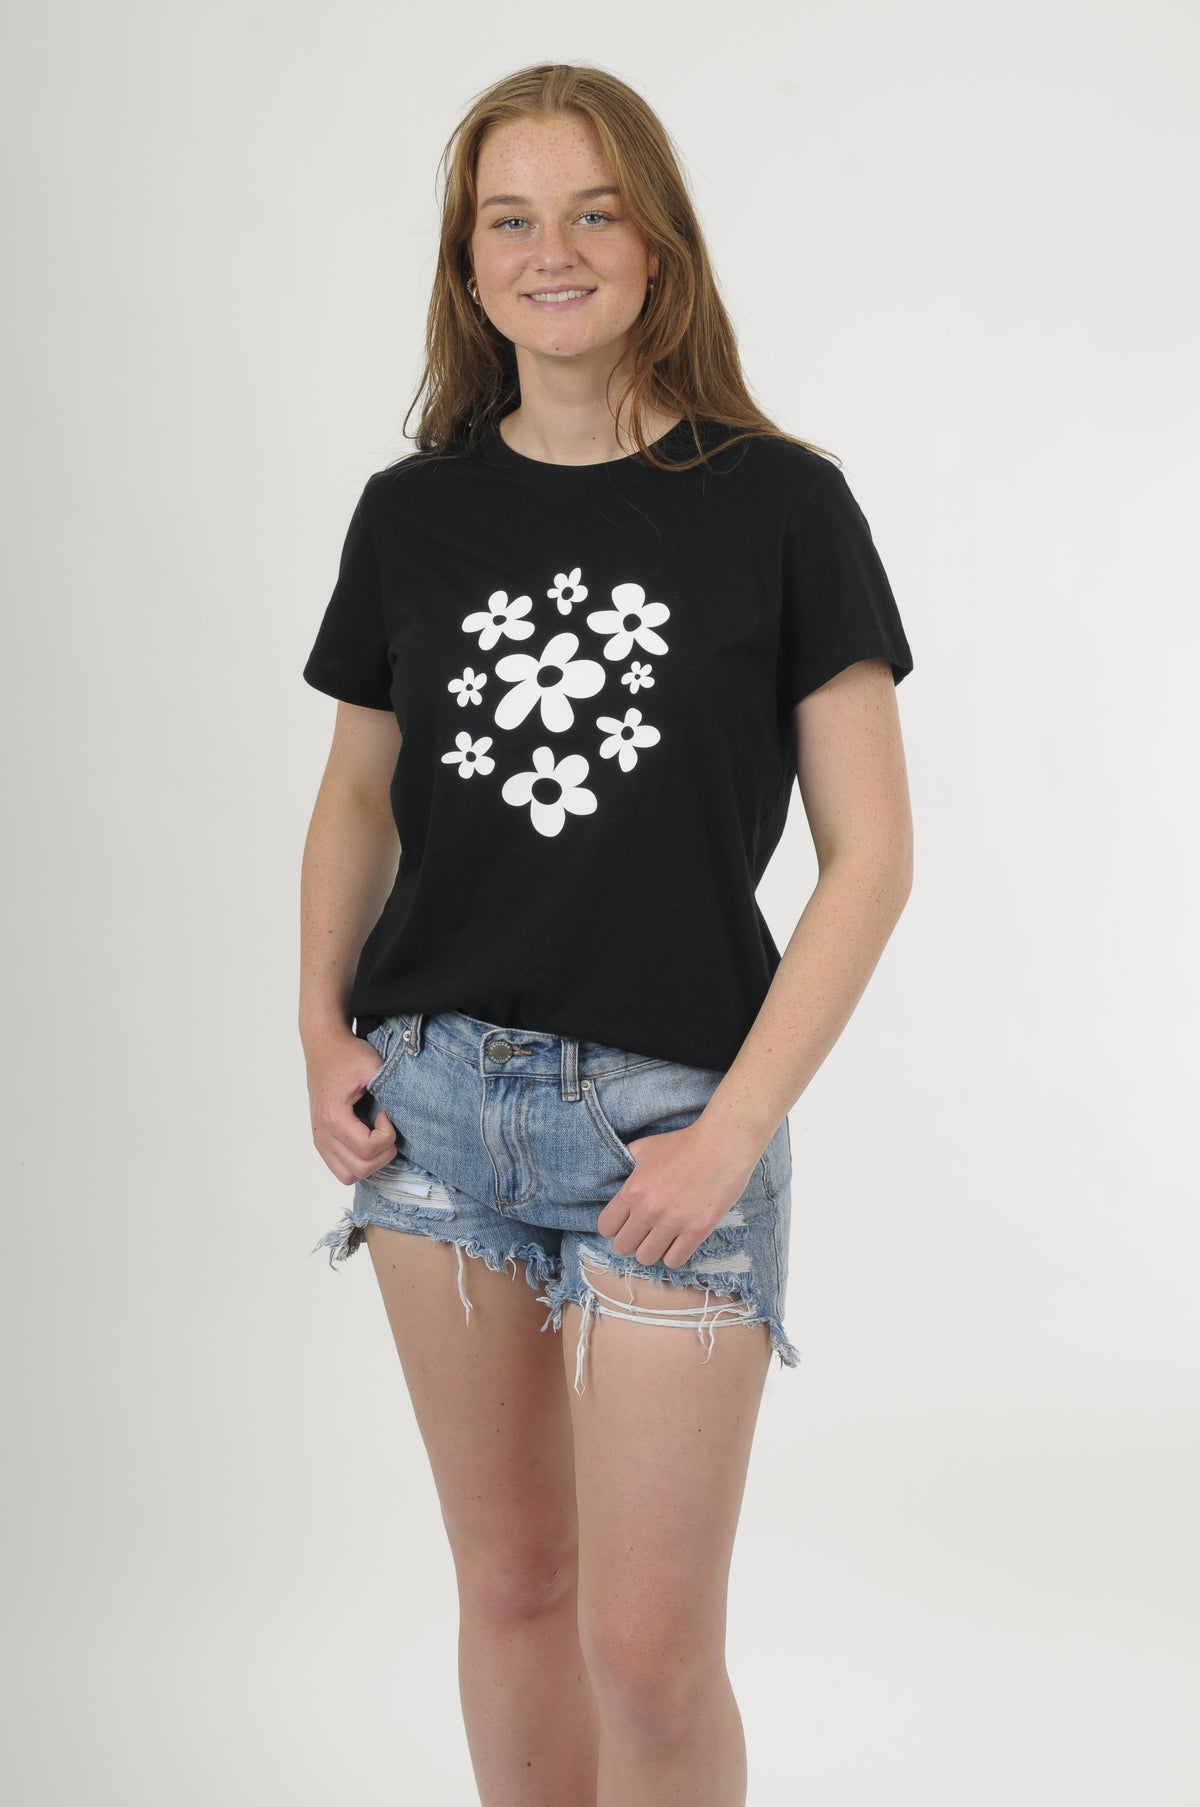 Tee Shirt - Flower Bunch Print - Pre Order